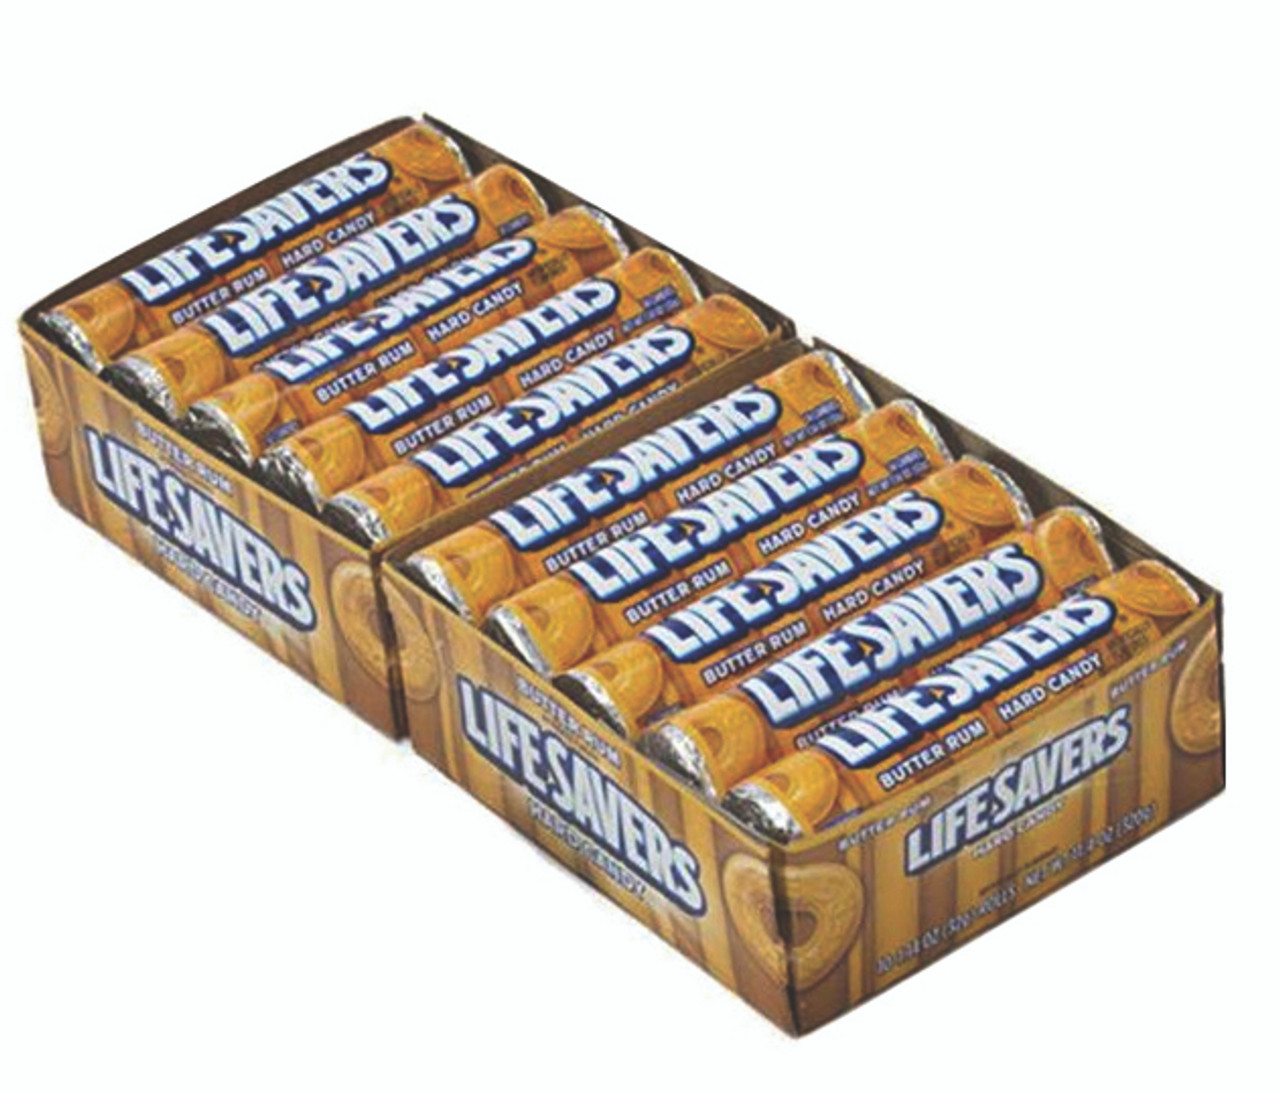 Life Savers Hard Candy, Original 5 Flavors, 1.14 oz, 20-count